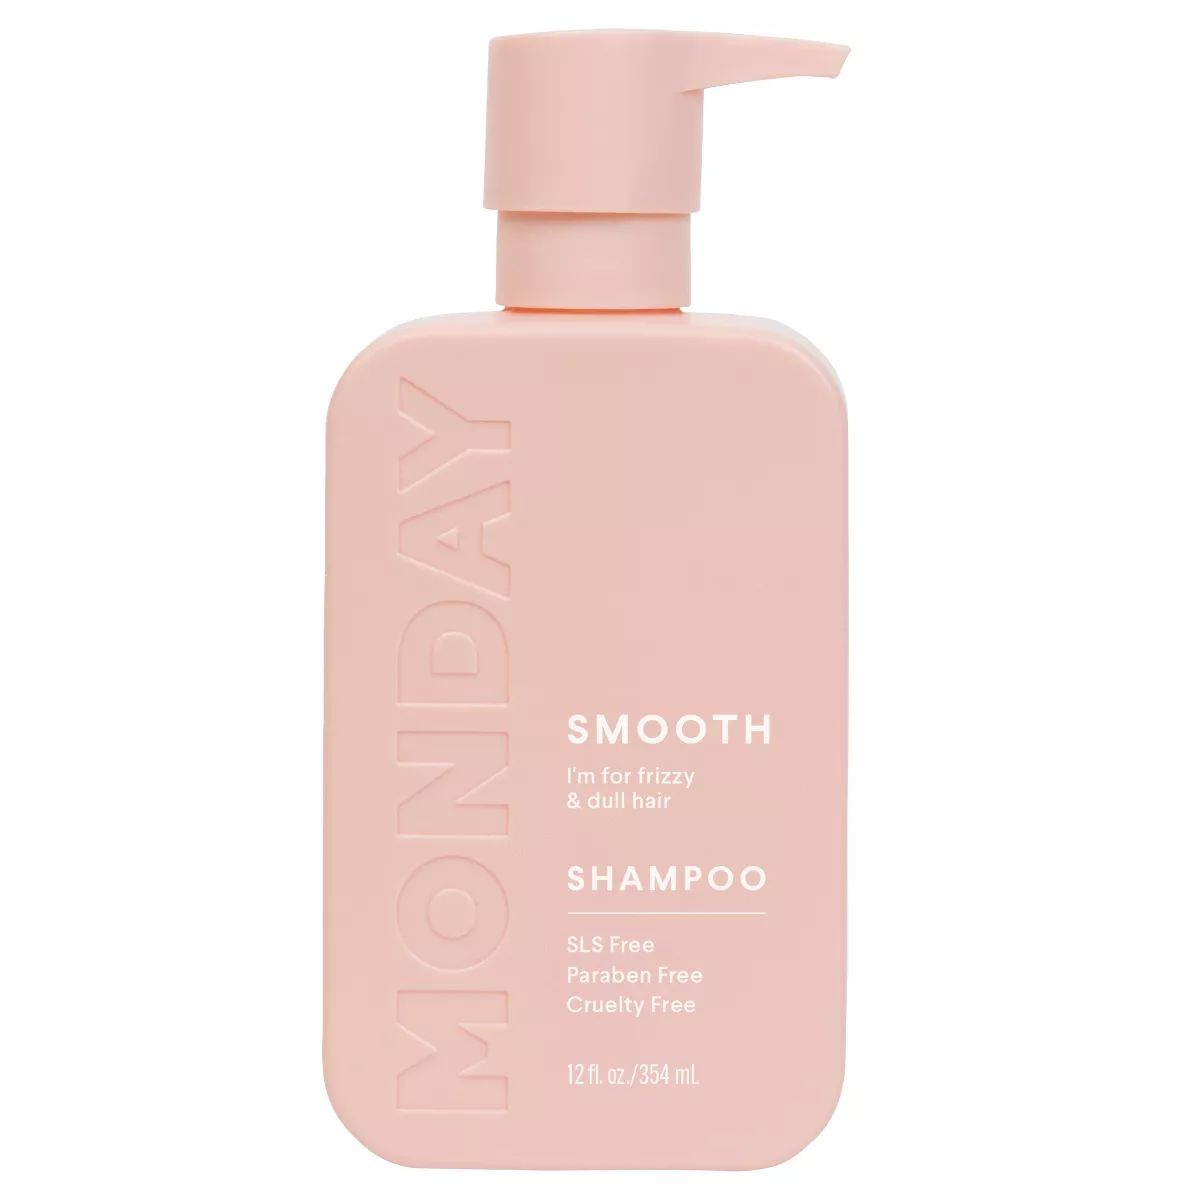 MONDAY Smooth Shampoo | Target